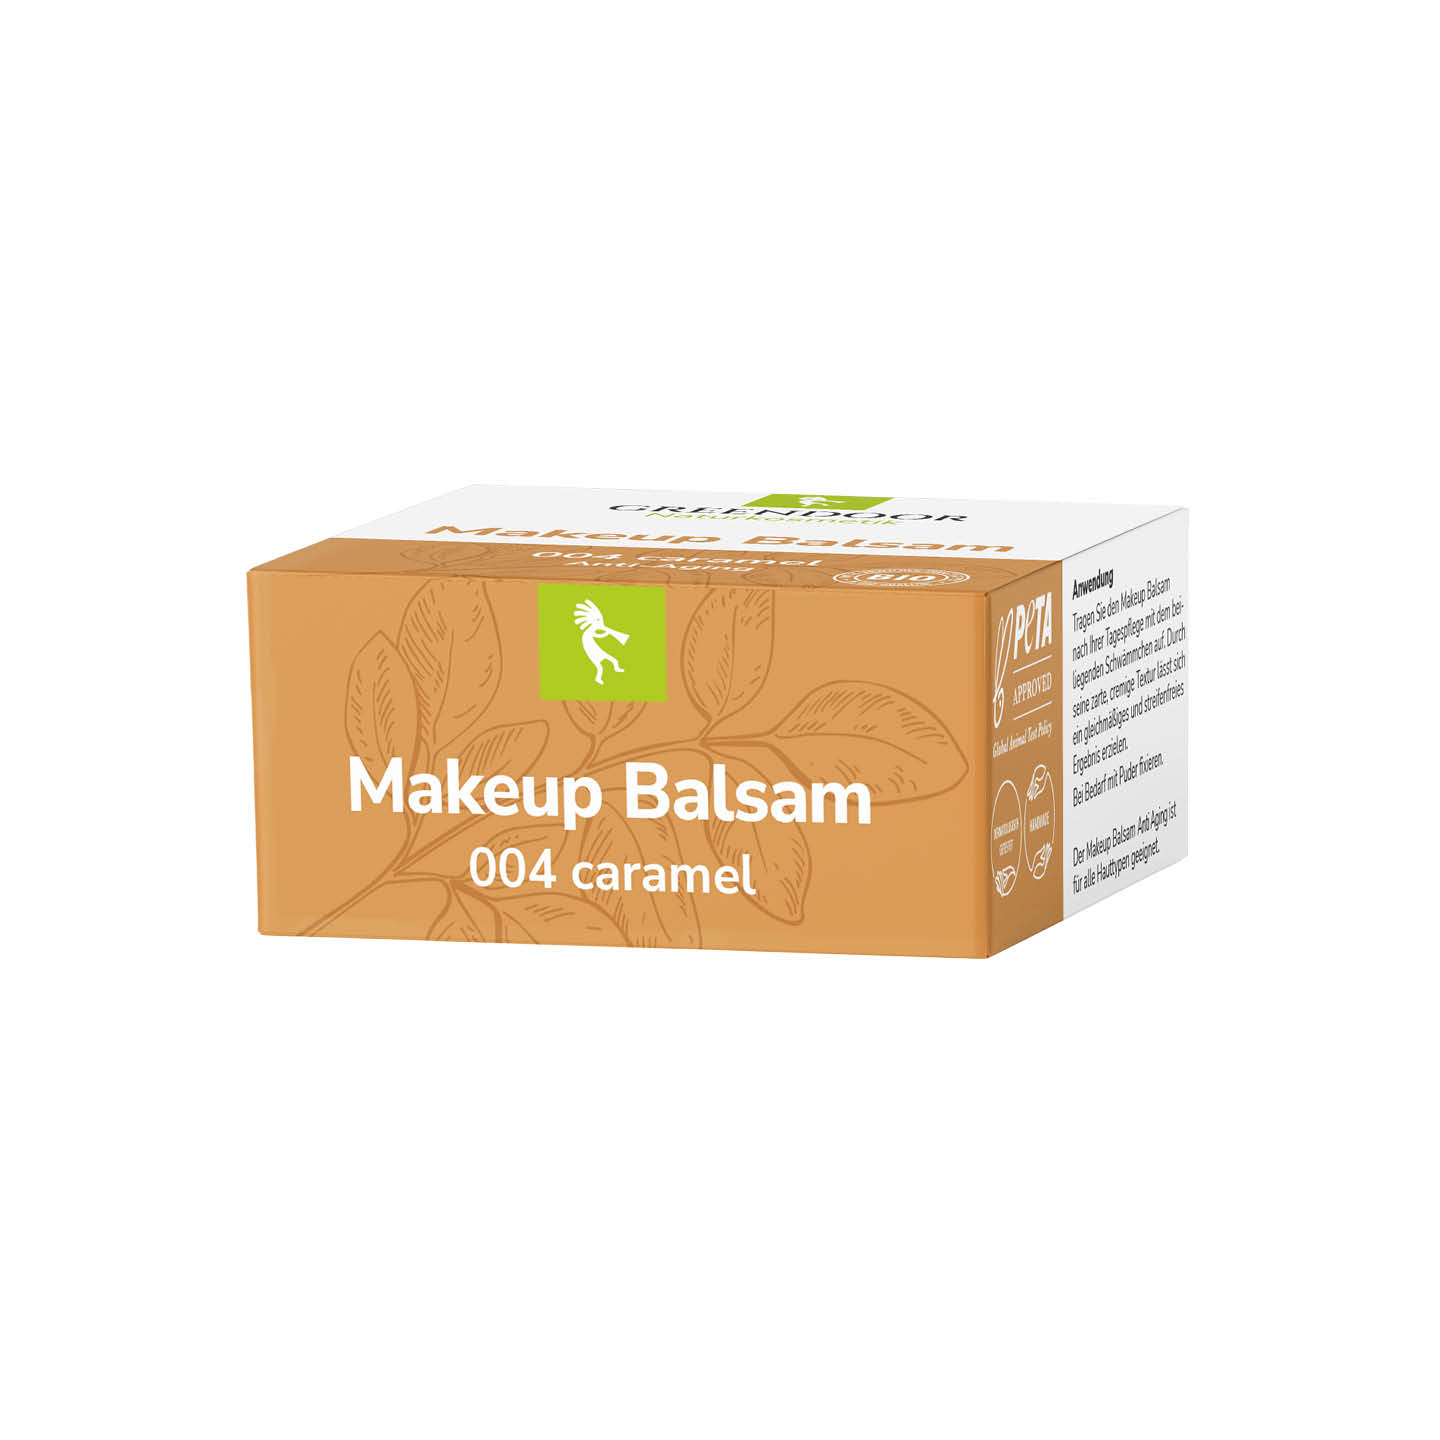 Make-up Balsam caramel